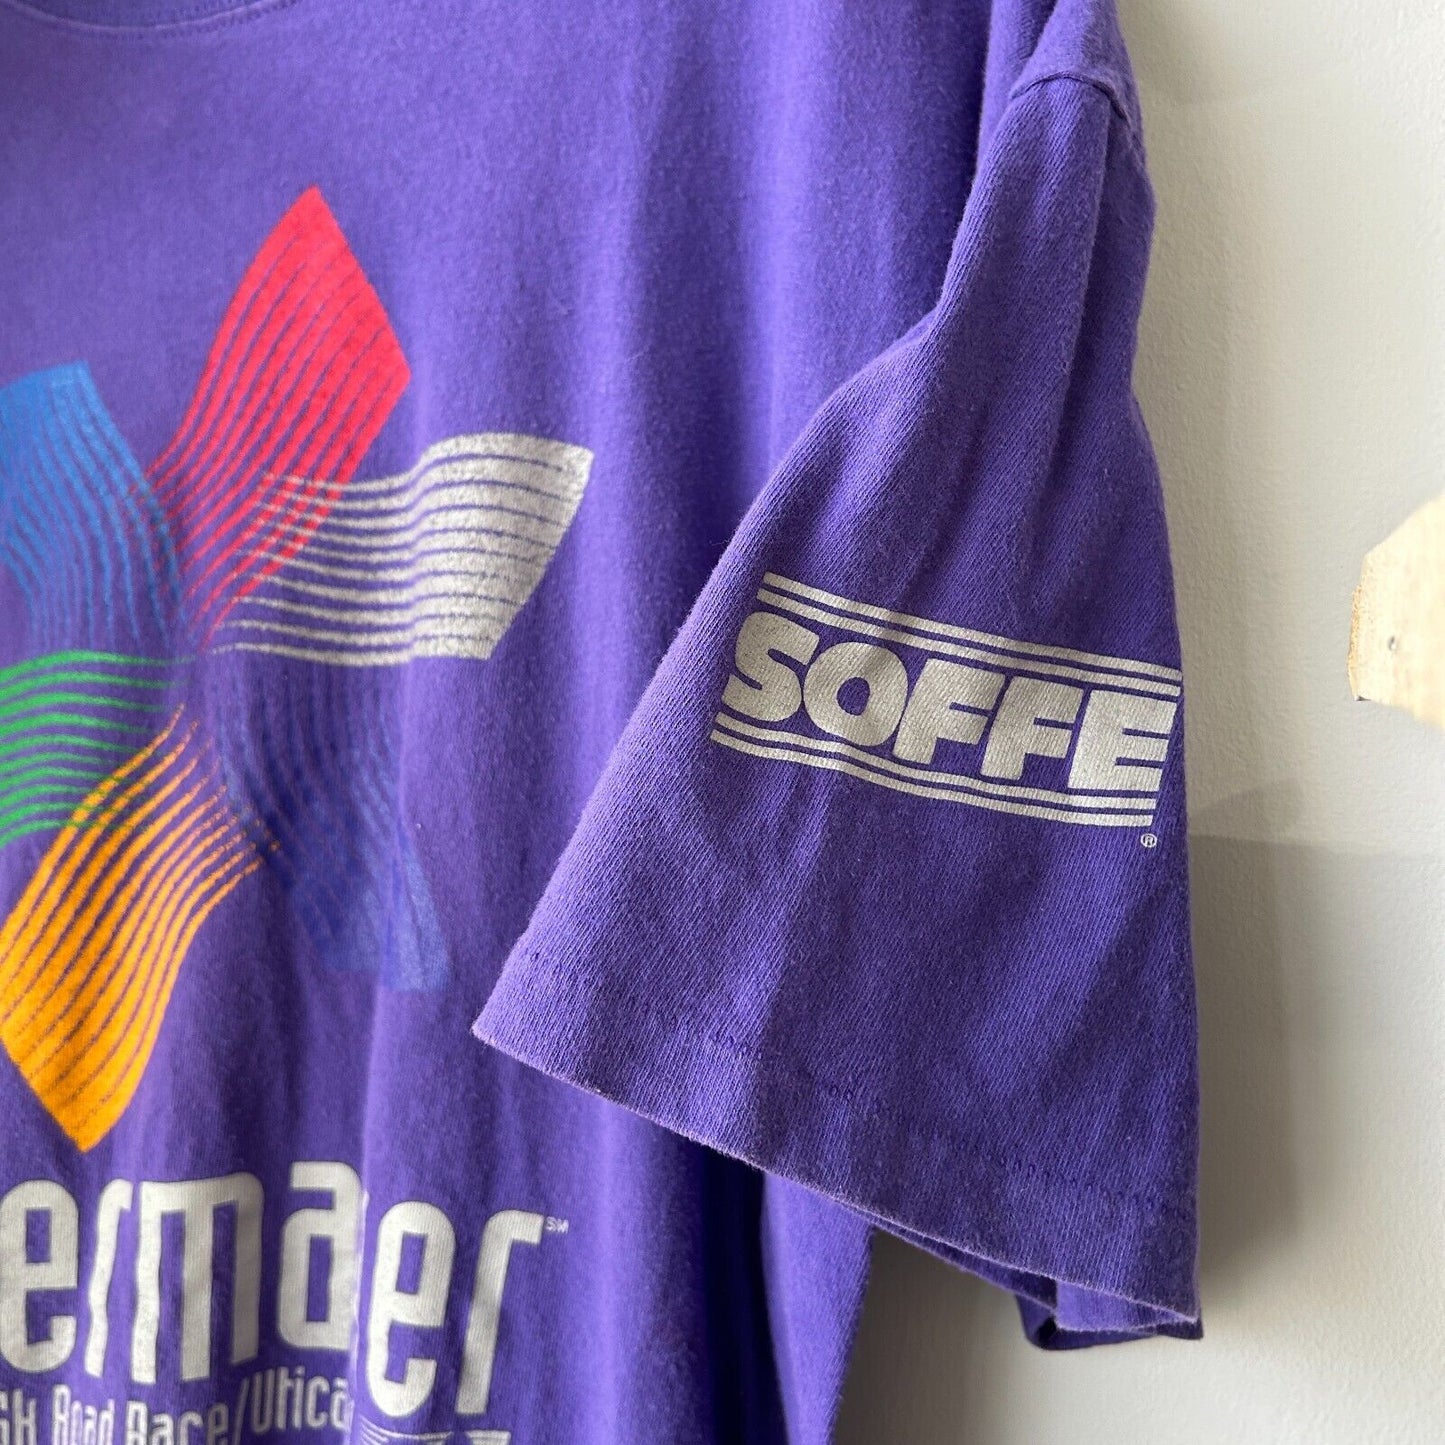 VINTAGE 90s | Boilermaker Road Race NY T-Shirt sz XL Adult